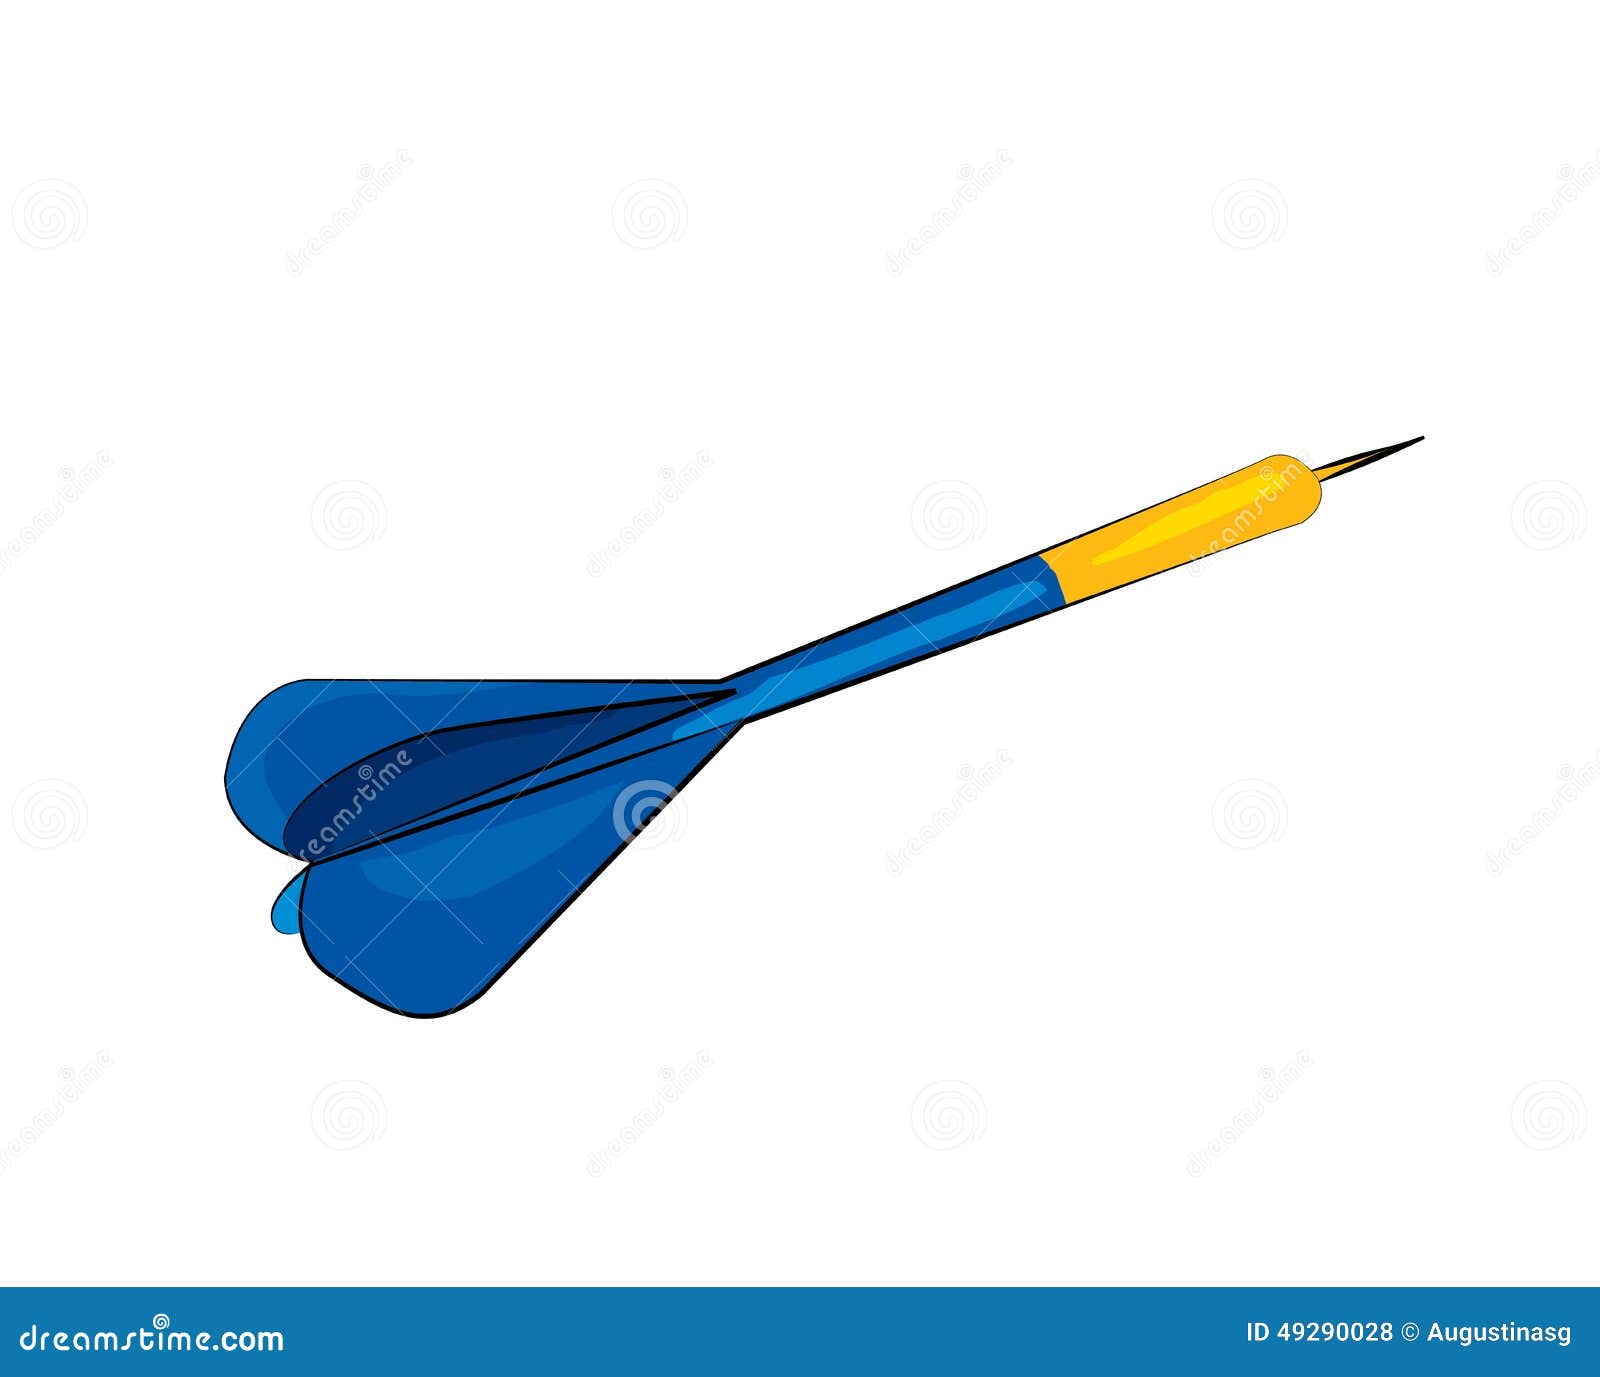 Darts arrow cartoon stock illustration. Illustration of game - 49290028